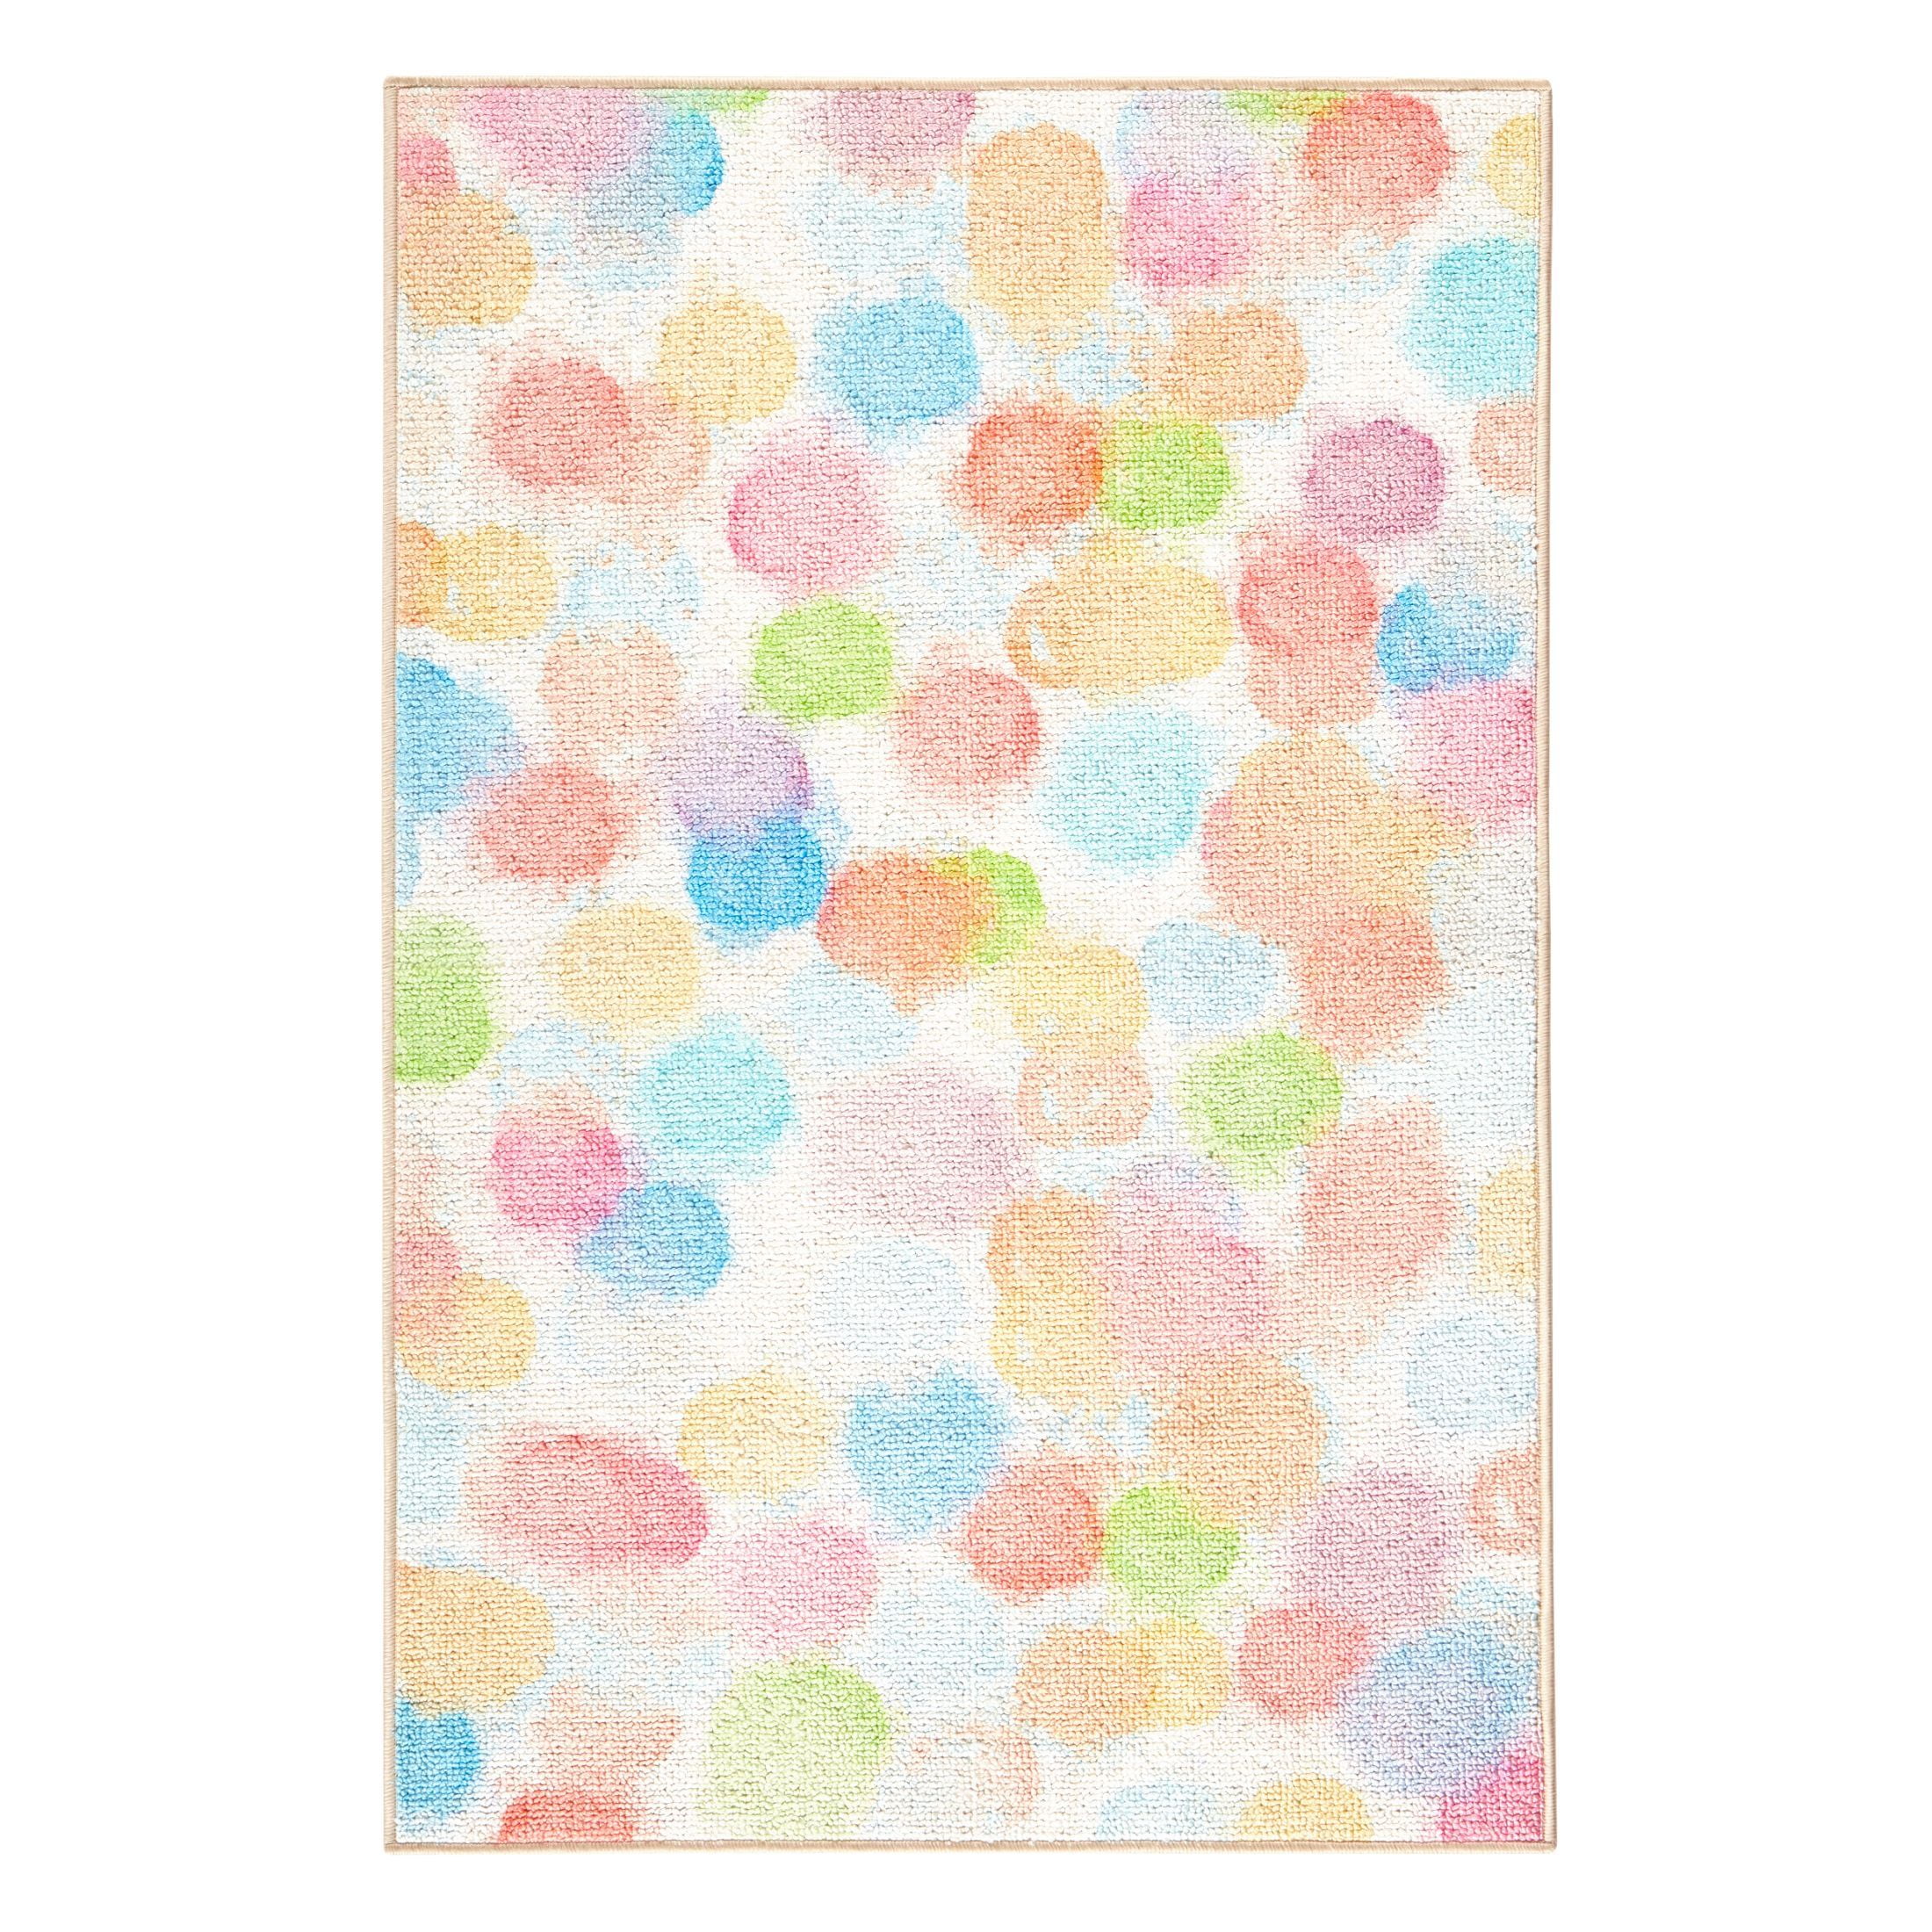 Multicolor Simple Rug Polyster Polka Dot Print Carpet Pet Friendly